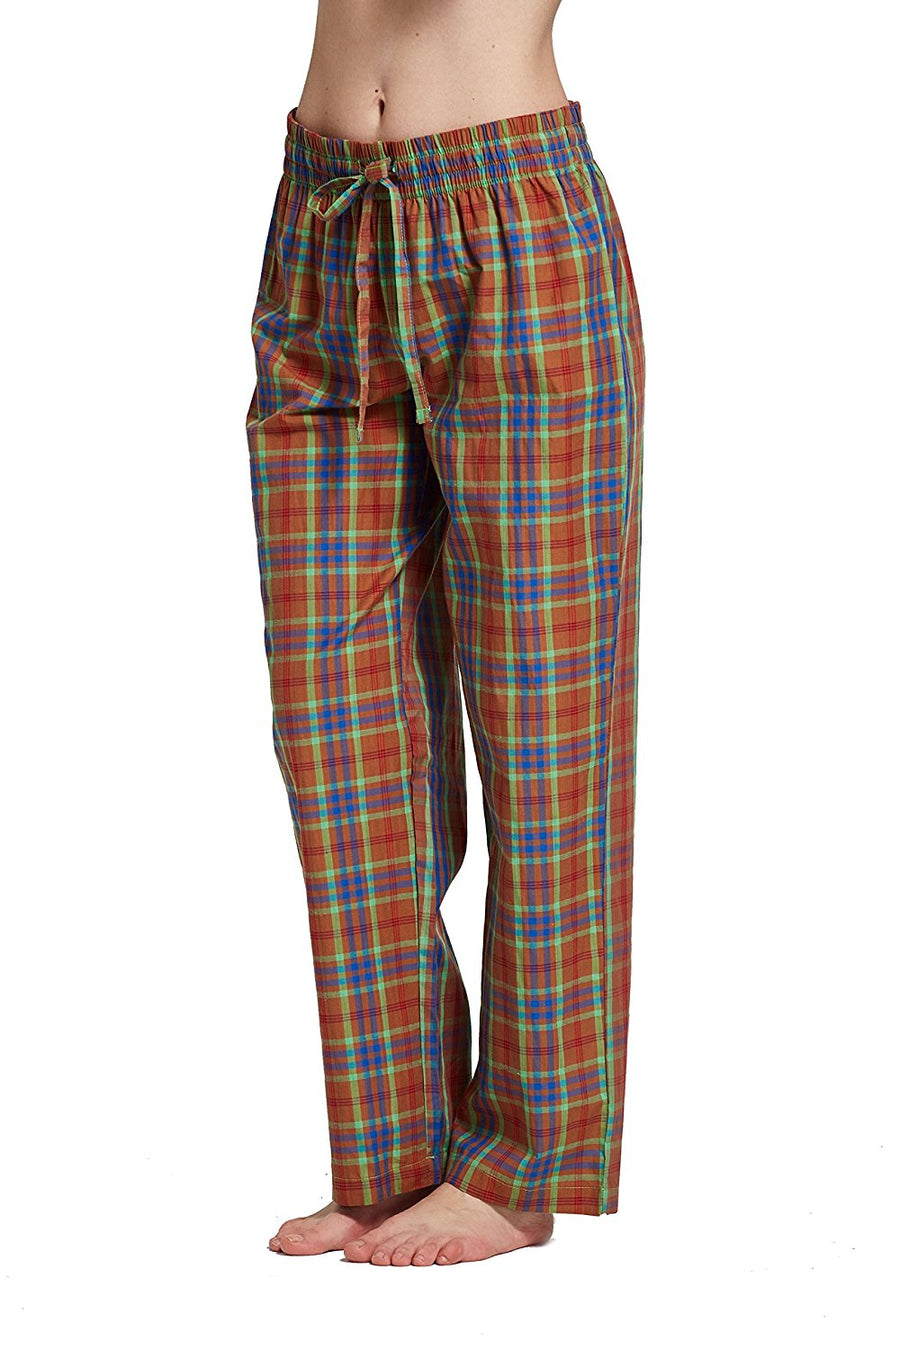 U2SKIIN Pajama Pants for Women Soft, 100% Cotton Comfortable